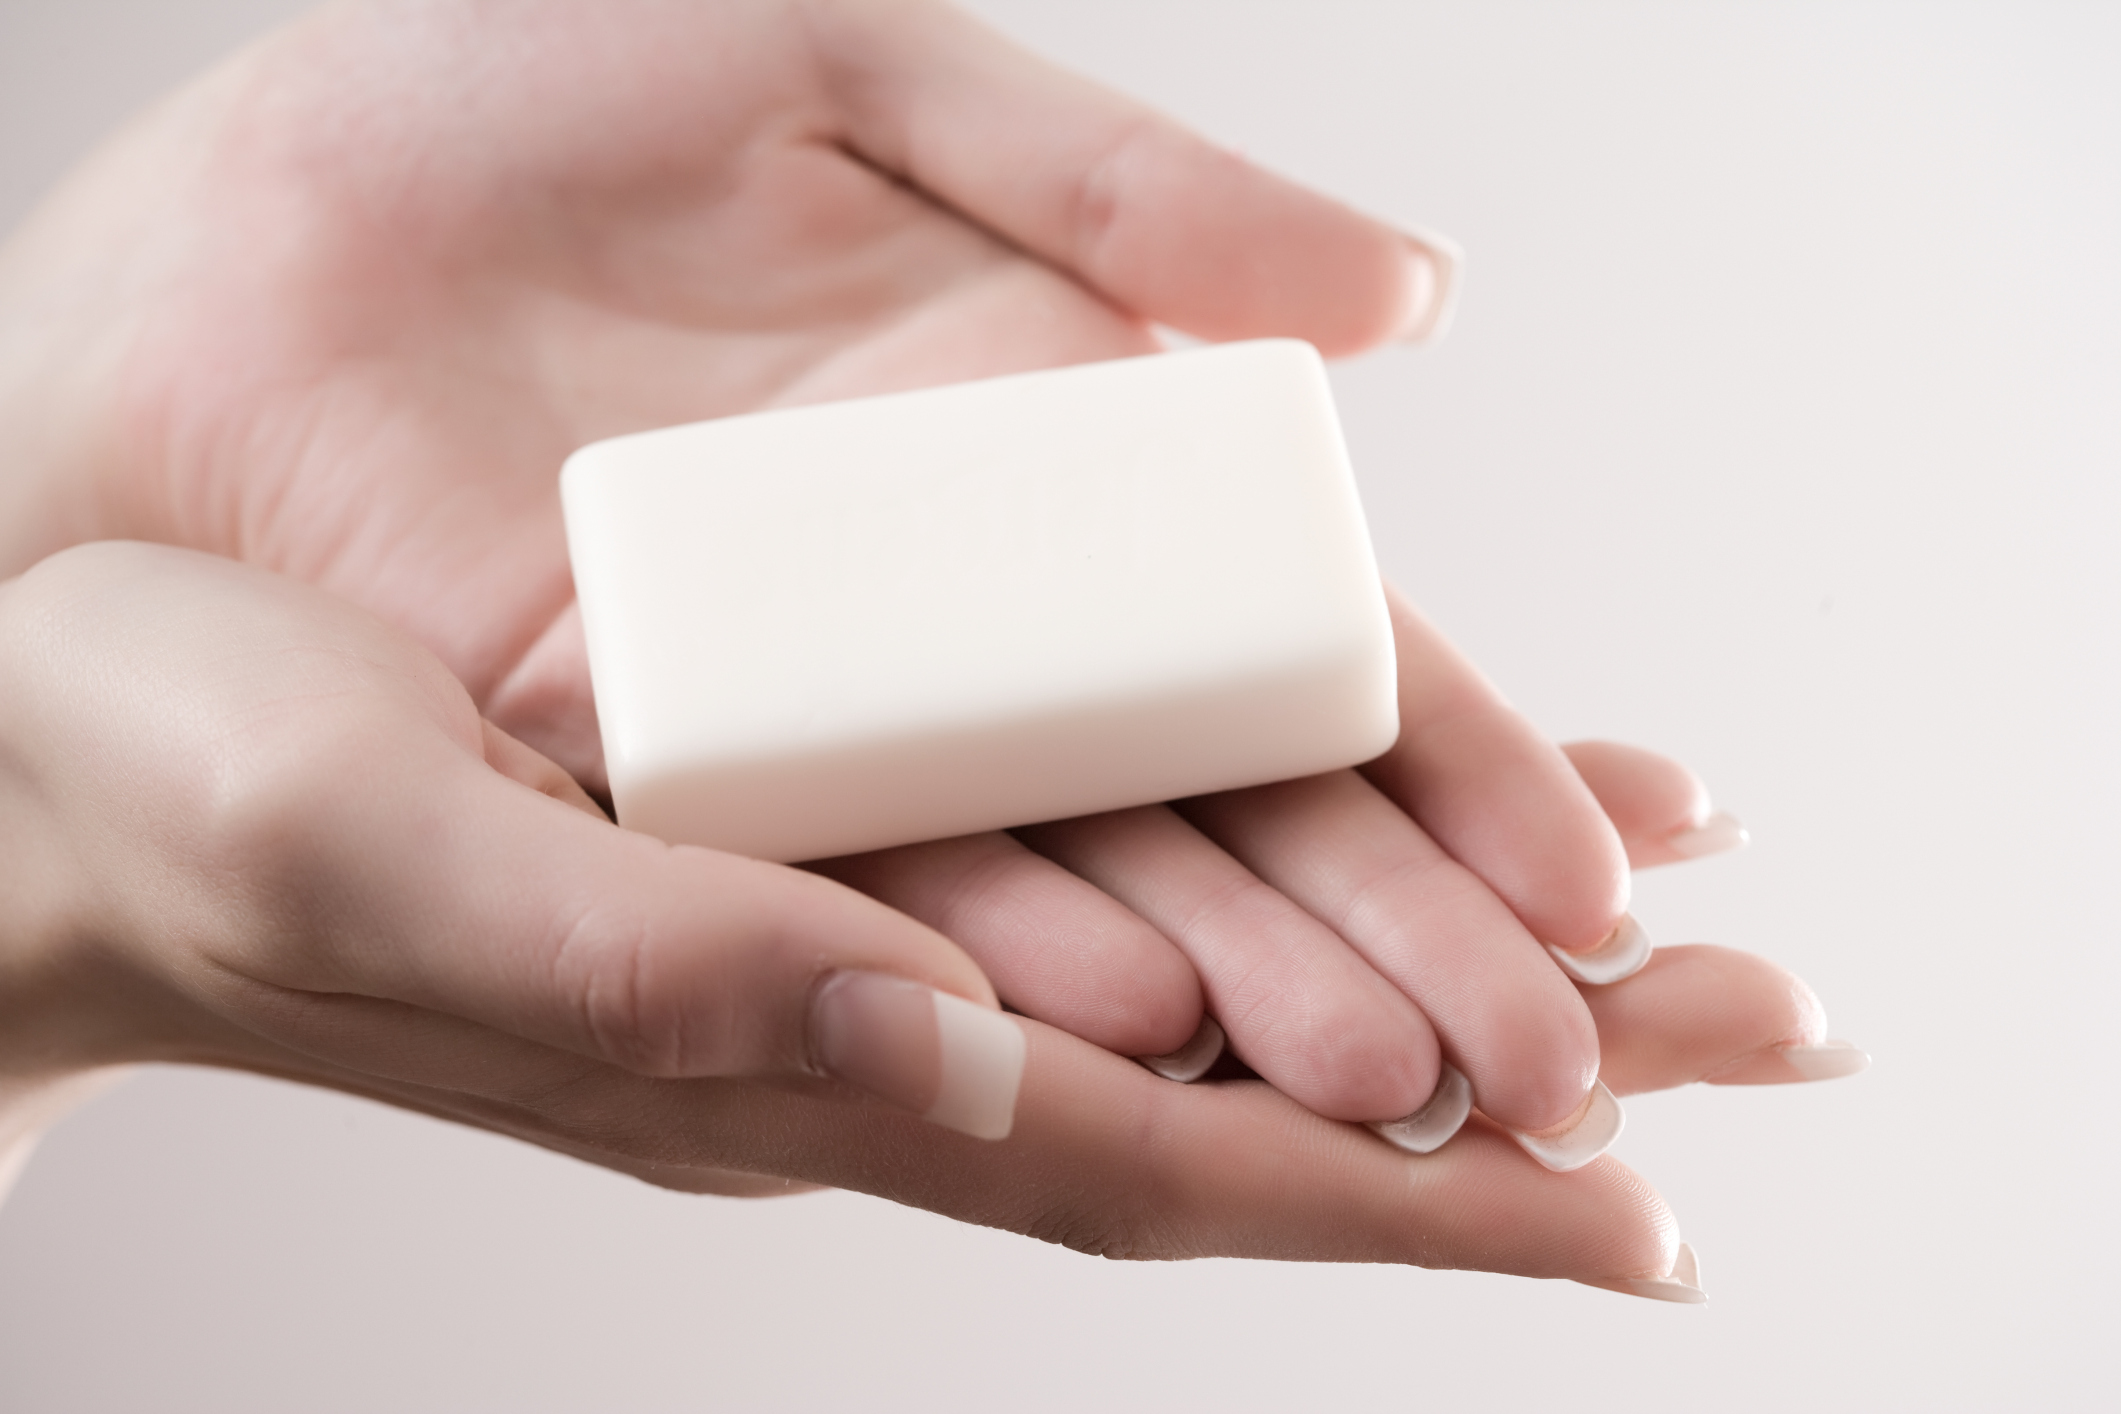 Soap ingredient may be linked to antibiotic resistance